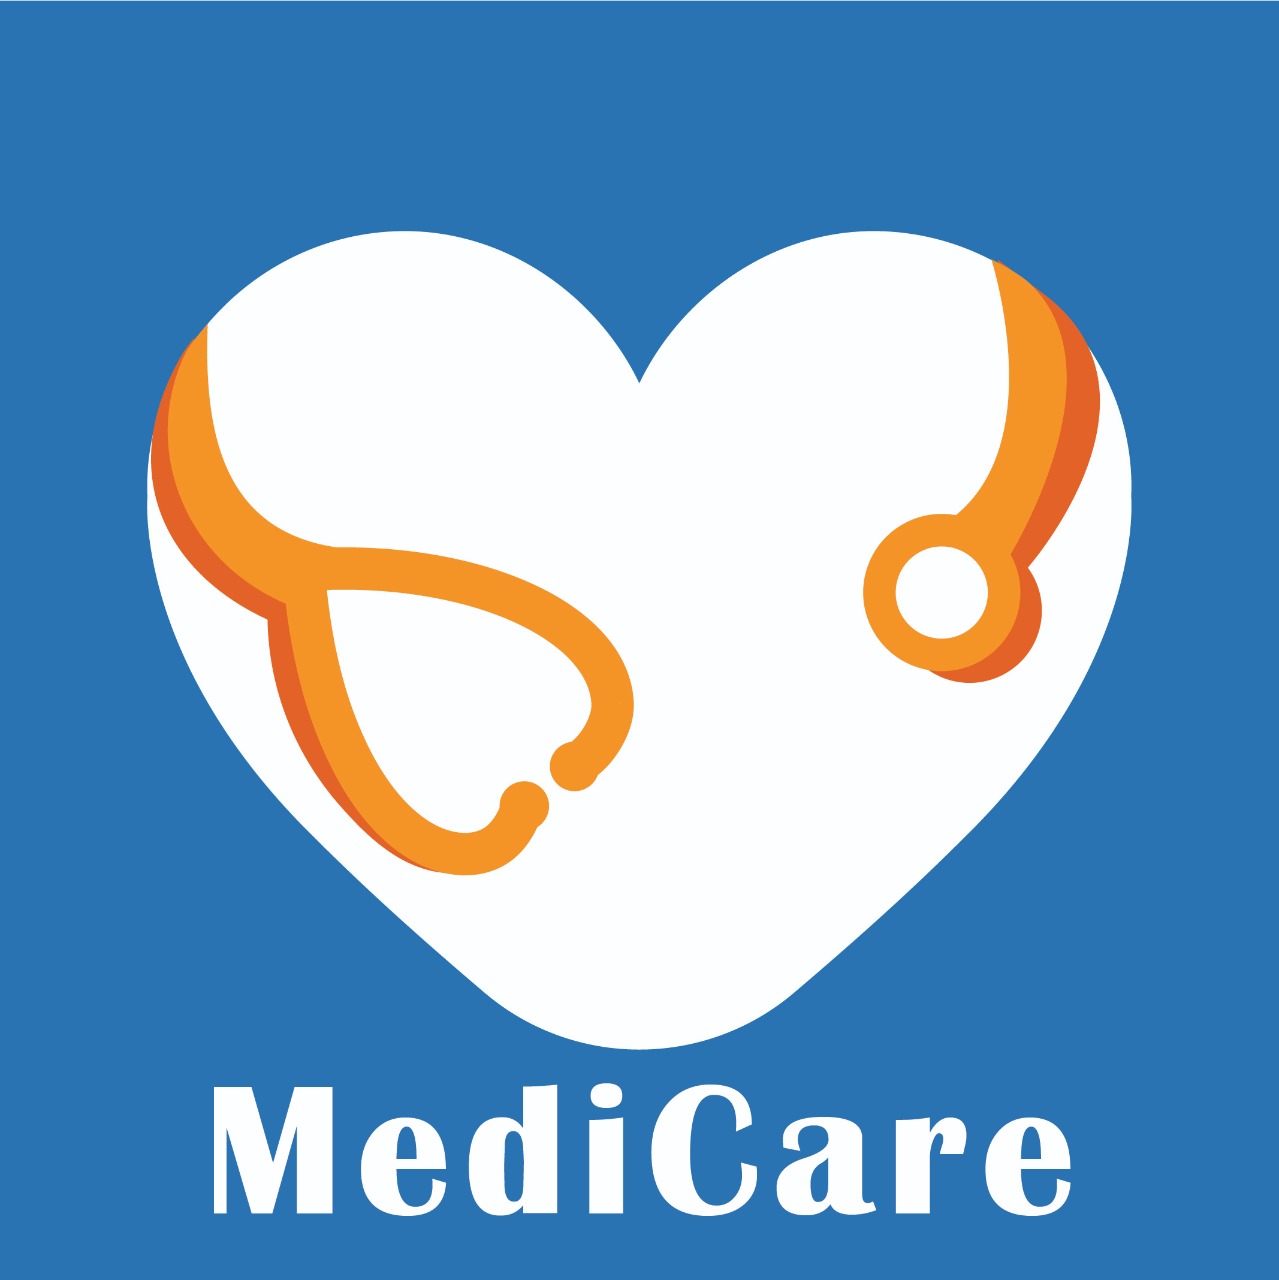 MediCare Application